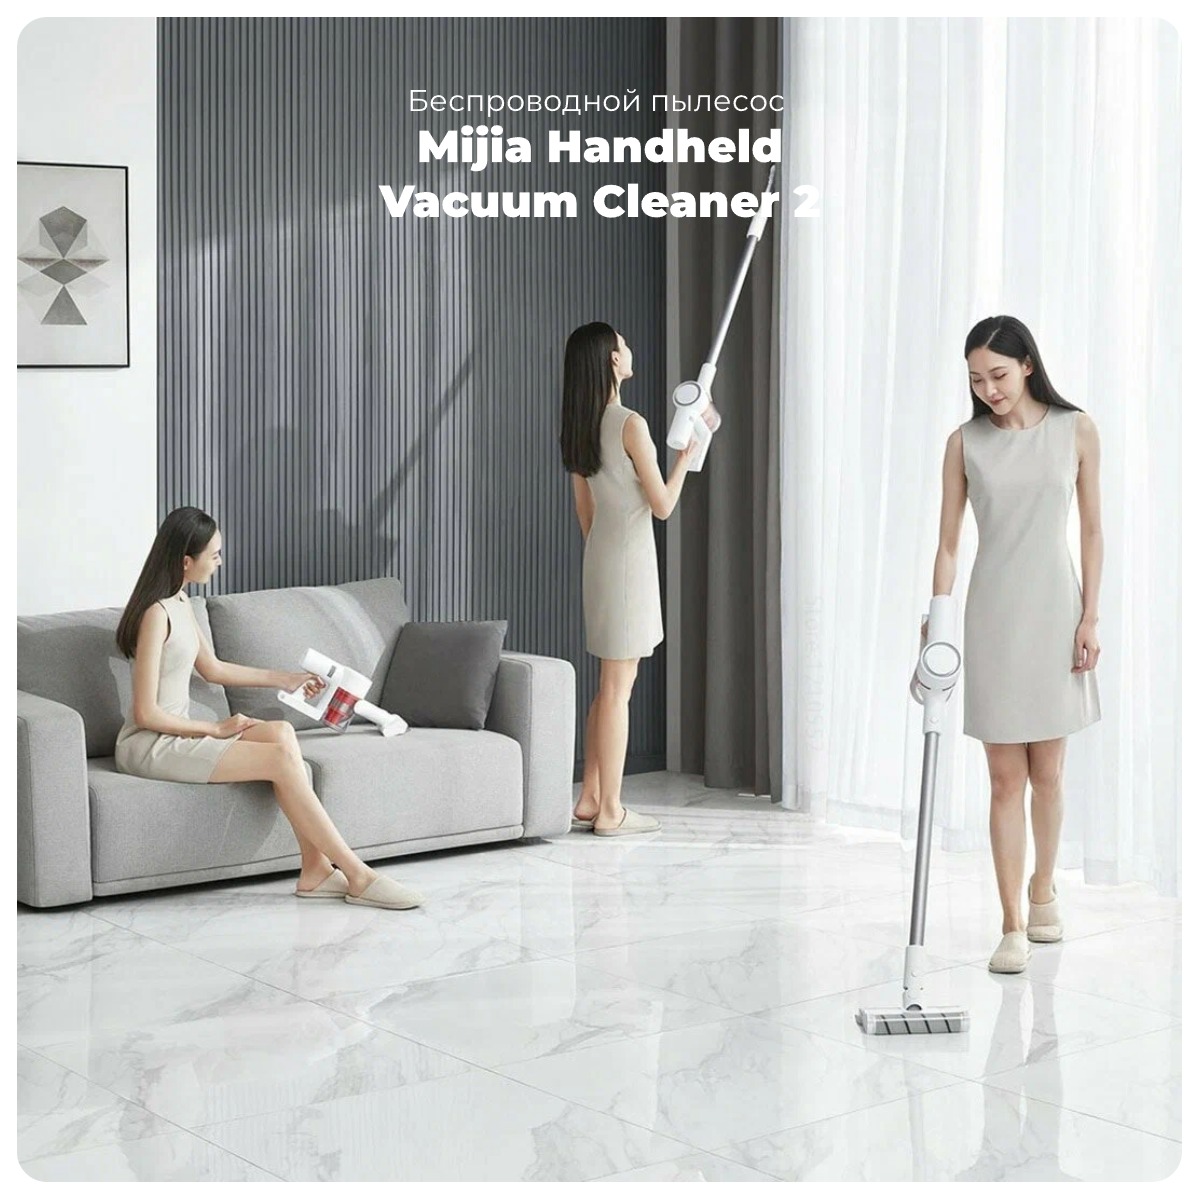 Mijia-Handheld-Vacuum-Cleaner-2-01